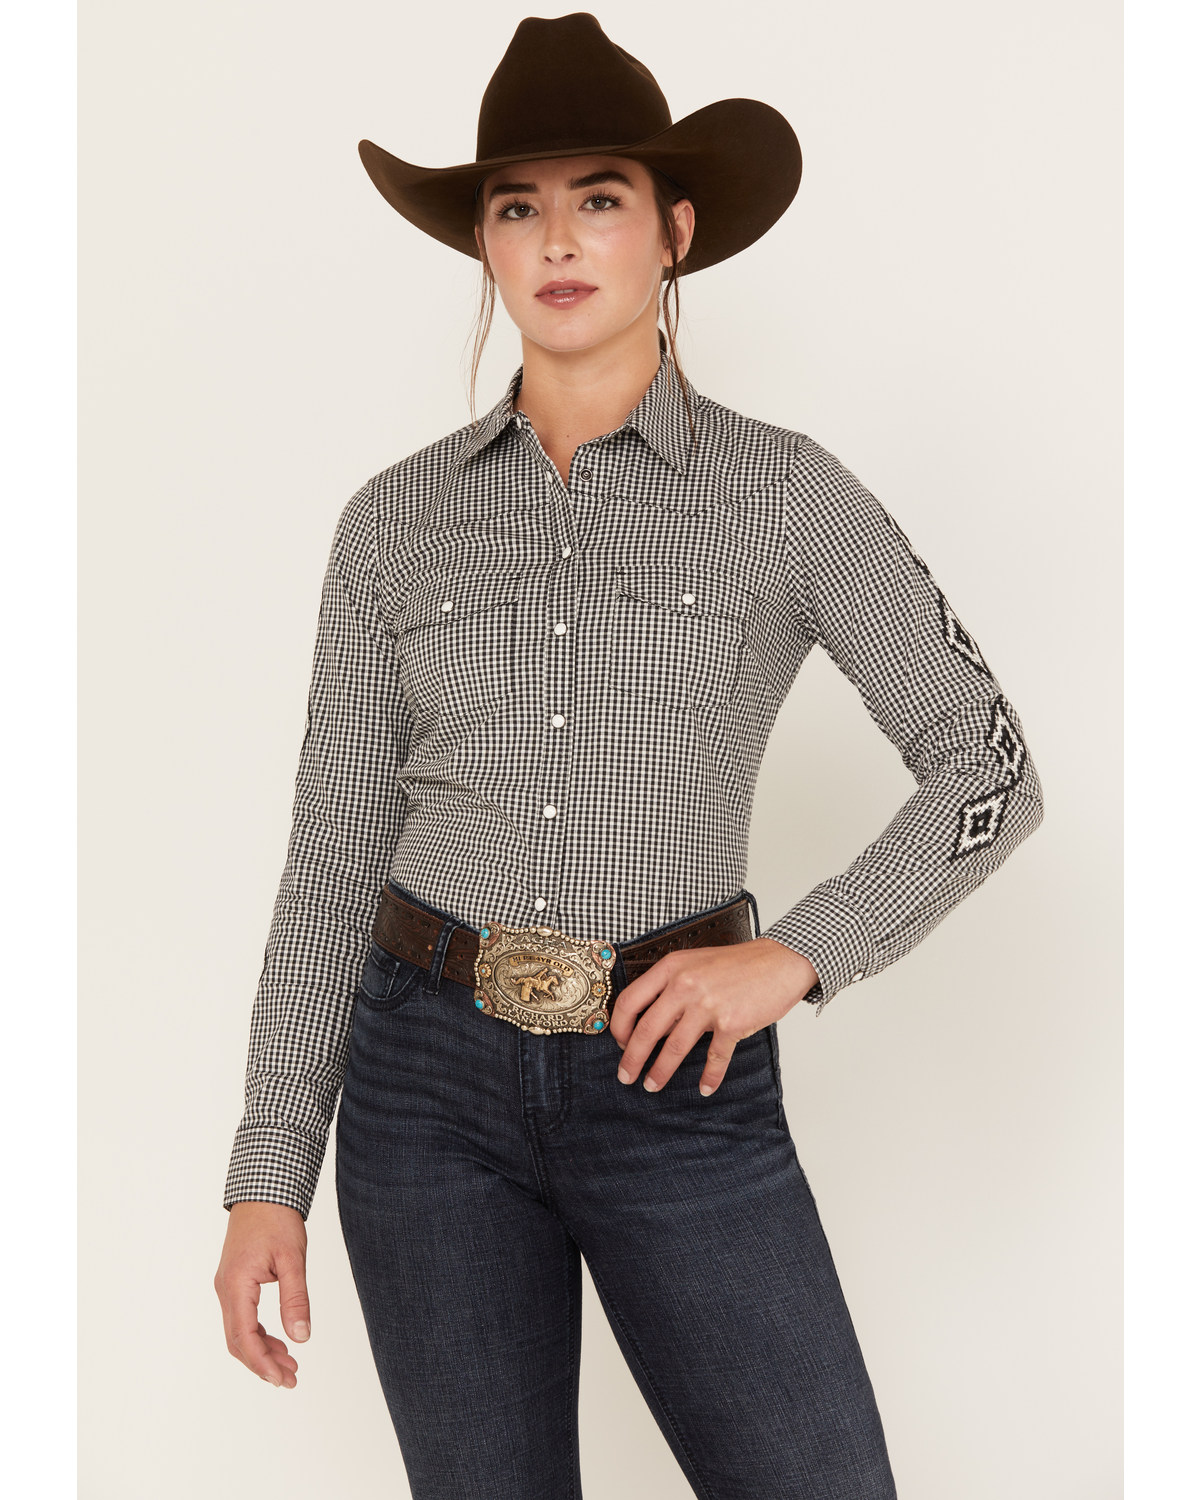 RANK 45® Women's Plaid Print Long Sleeve Embroidery Western Riding Snap Shirt